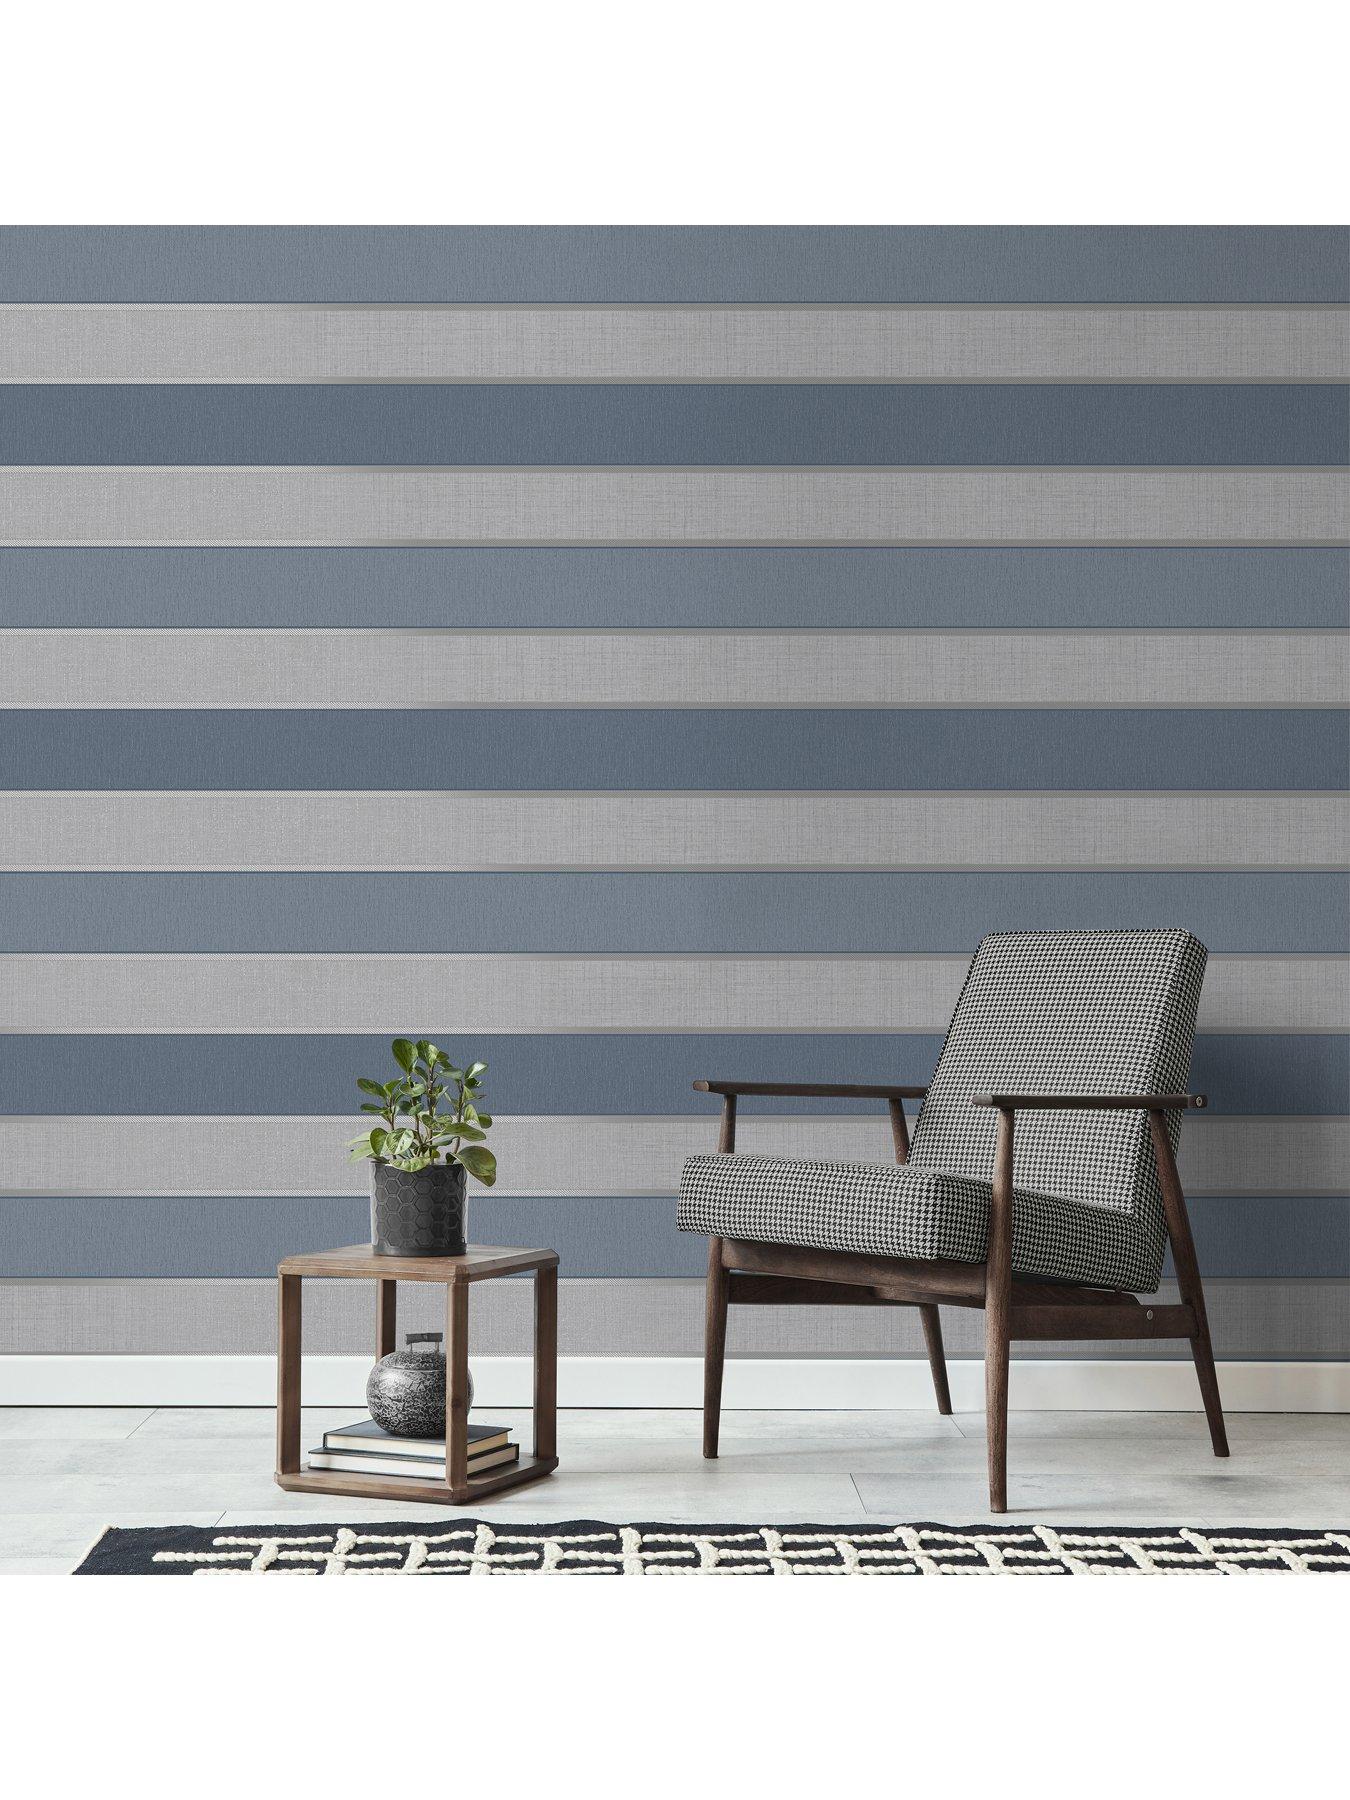 Fine Decor Larson Stripe Wallpaper in Navy and Silver | Very.co.uk